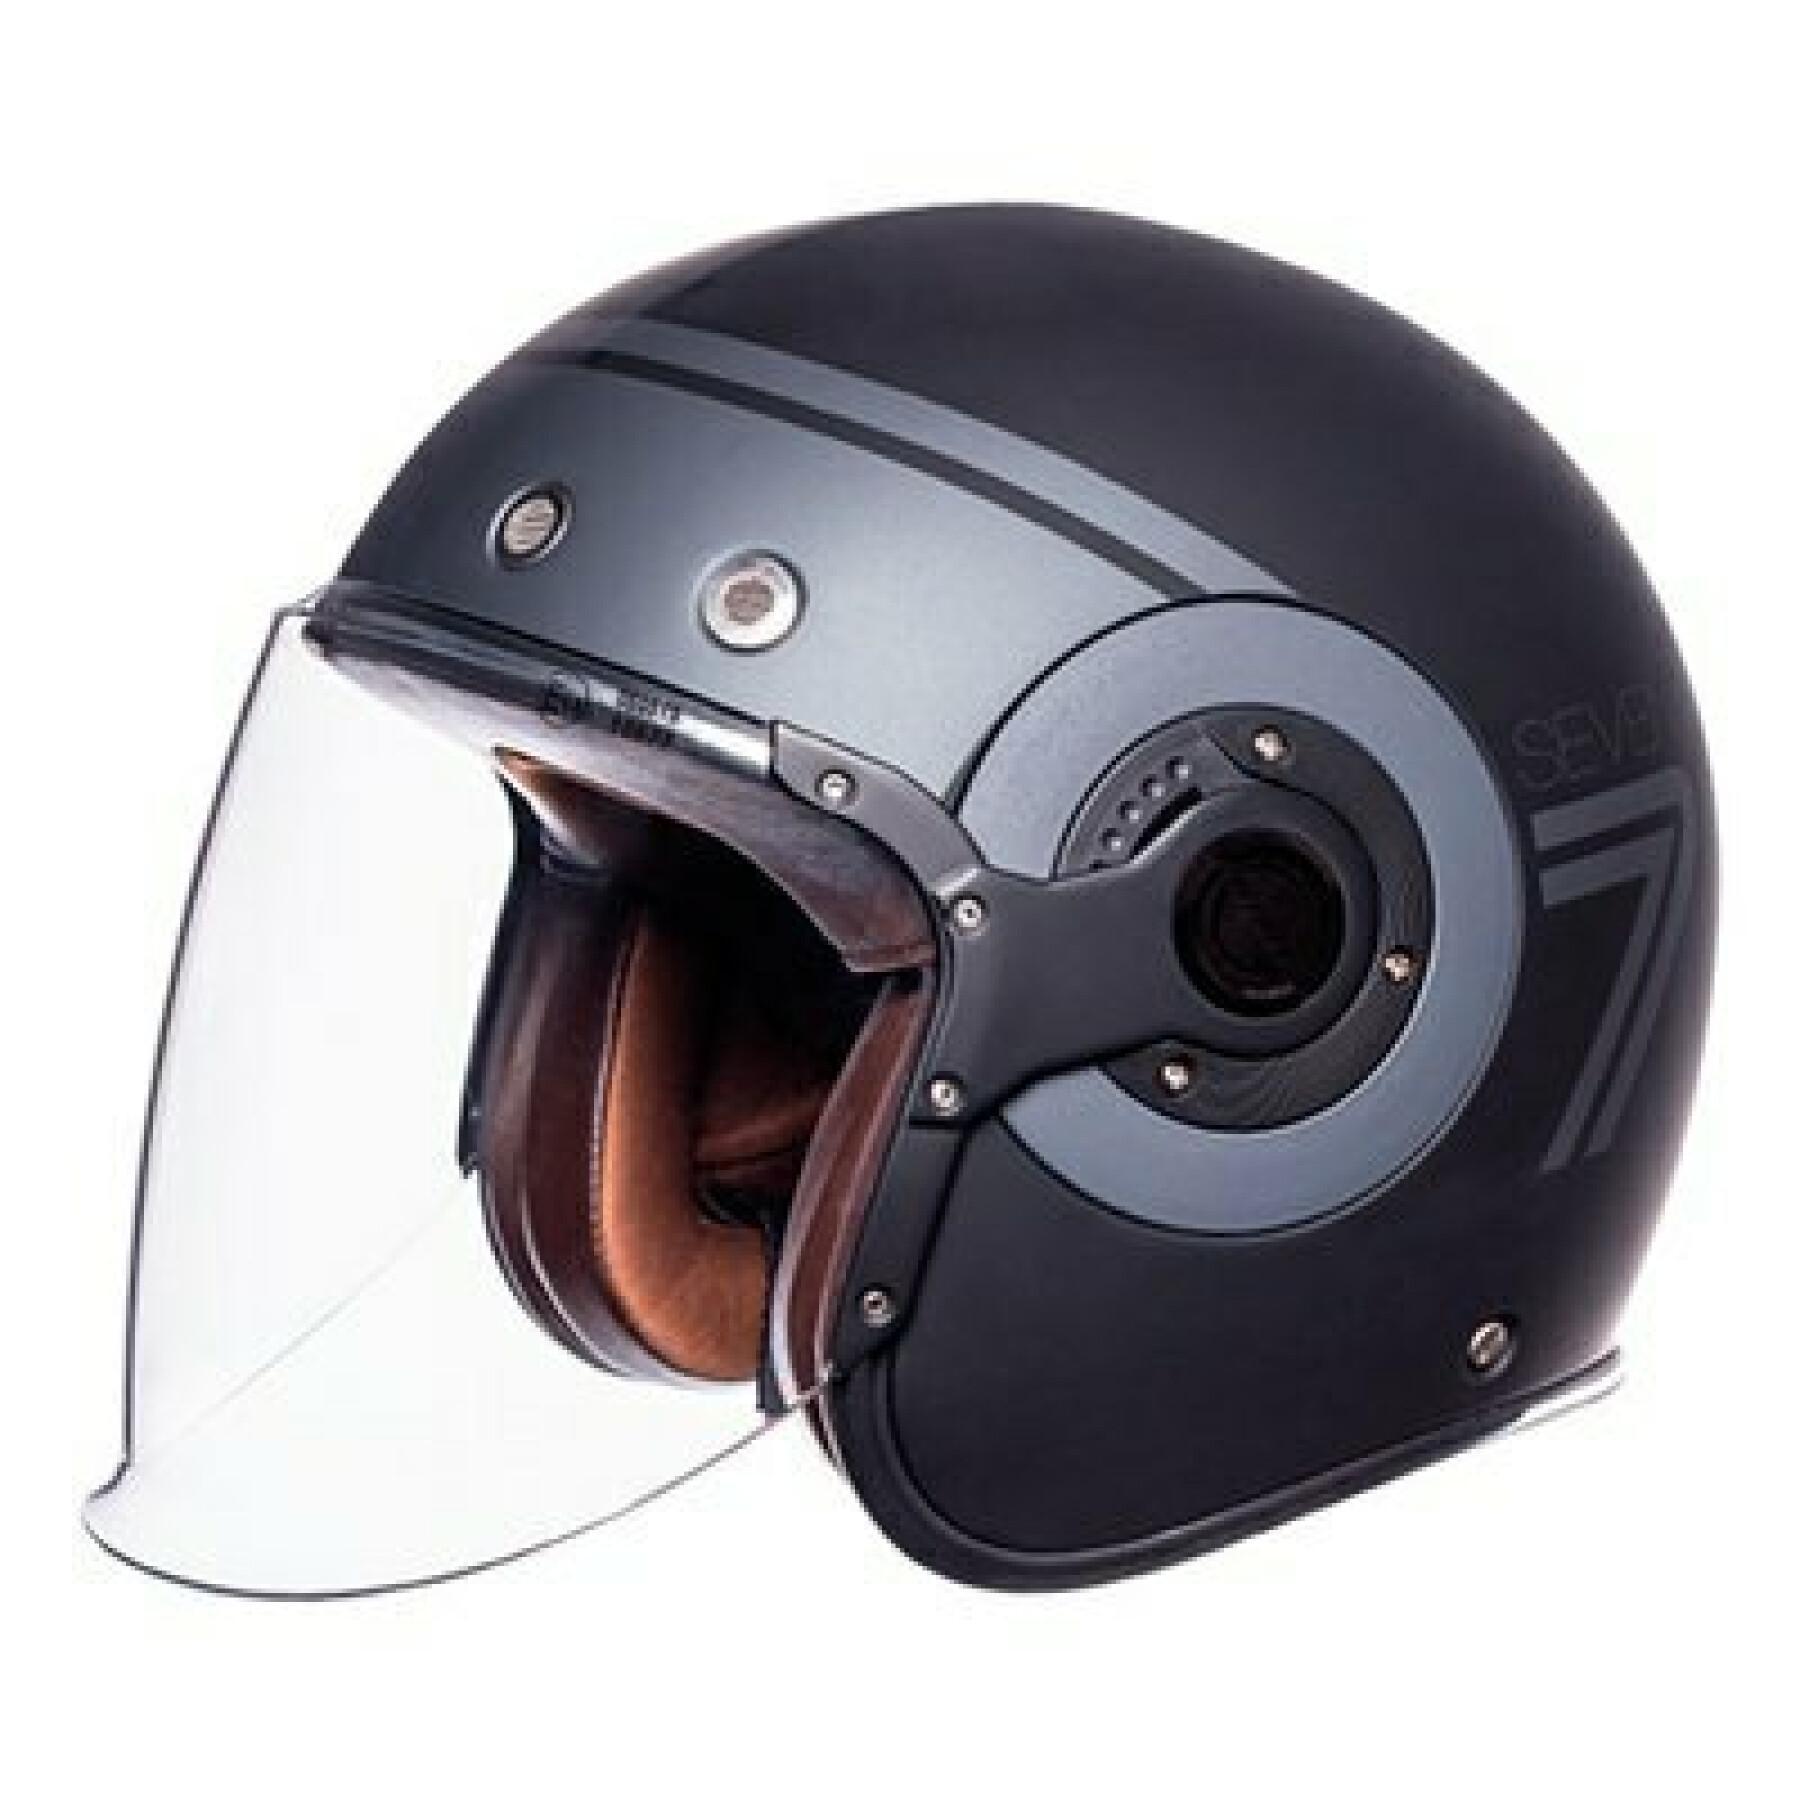 Jet motorcycle helmet SMK retro seven